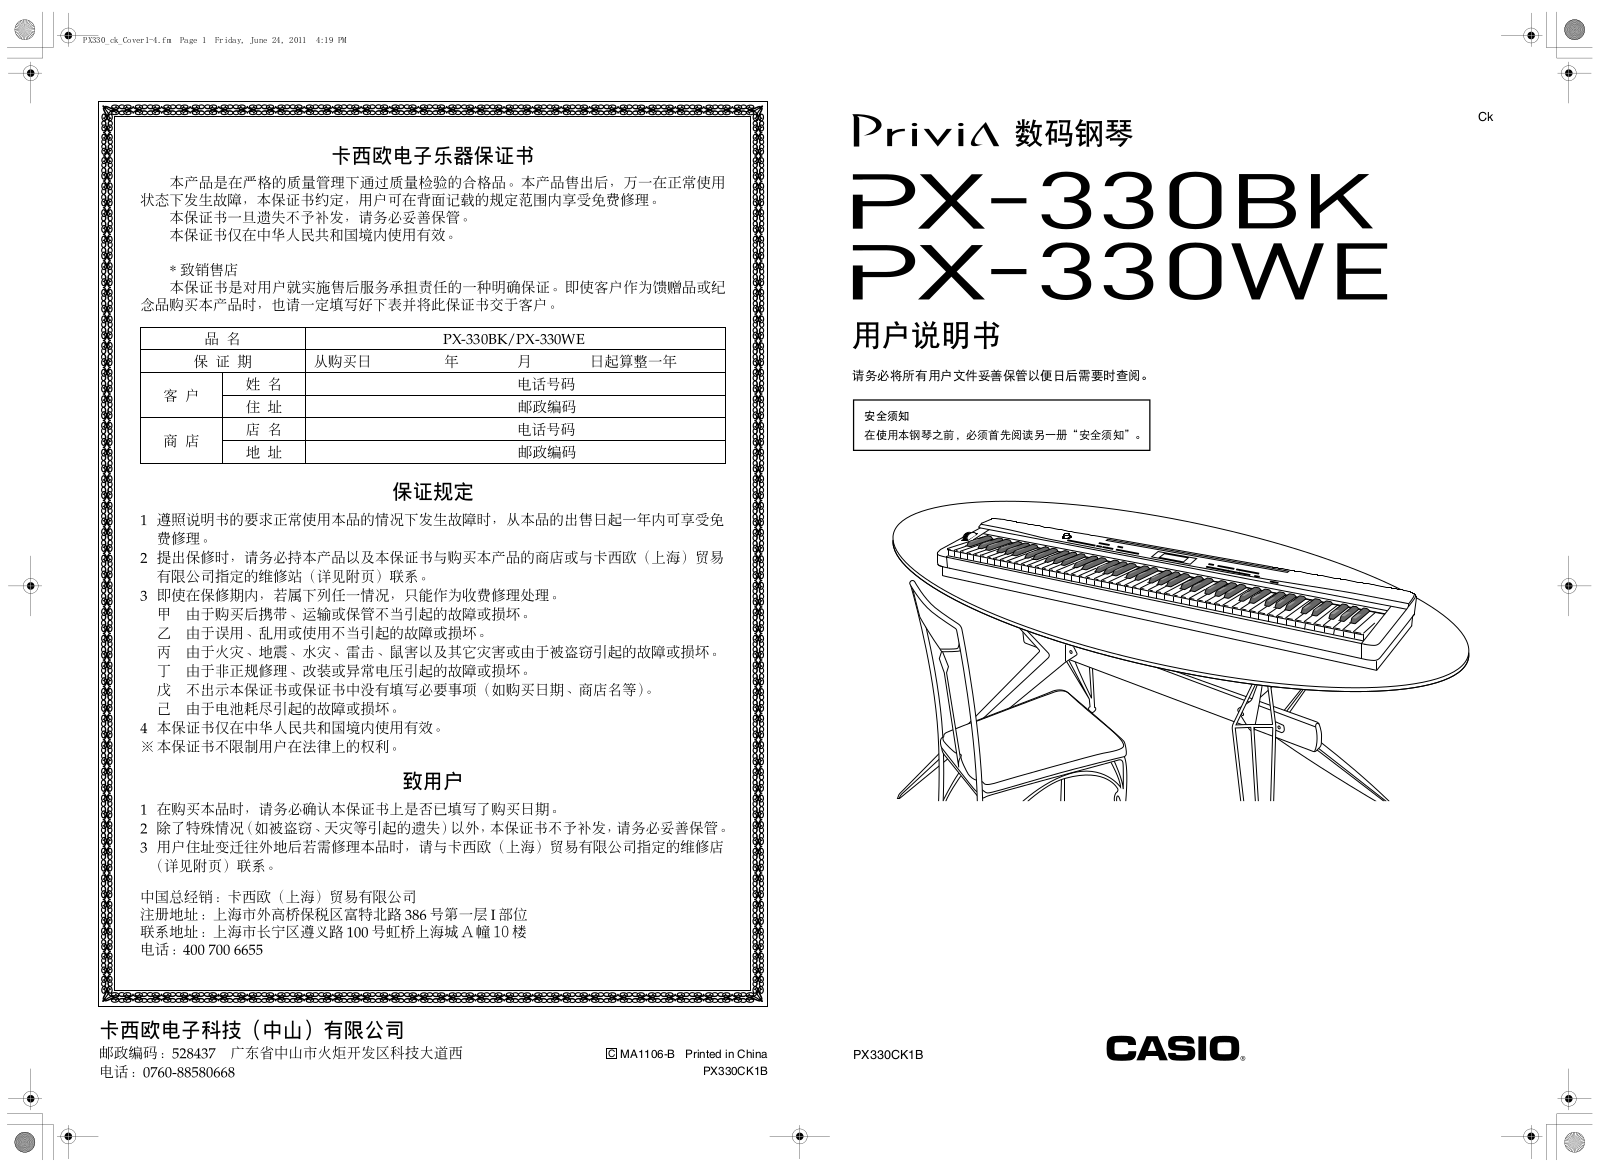 CASIO PX-330BK, PX-330WE User Manual